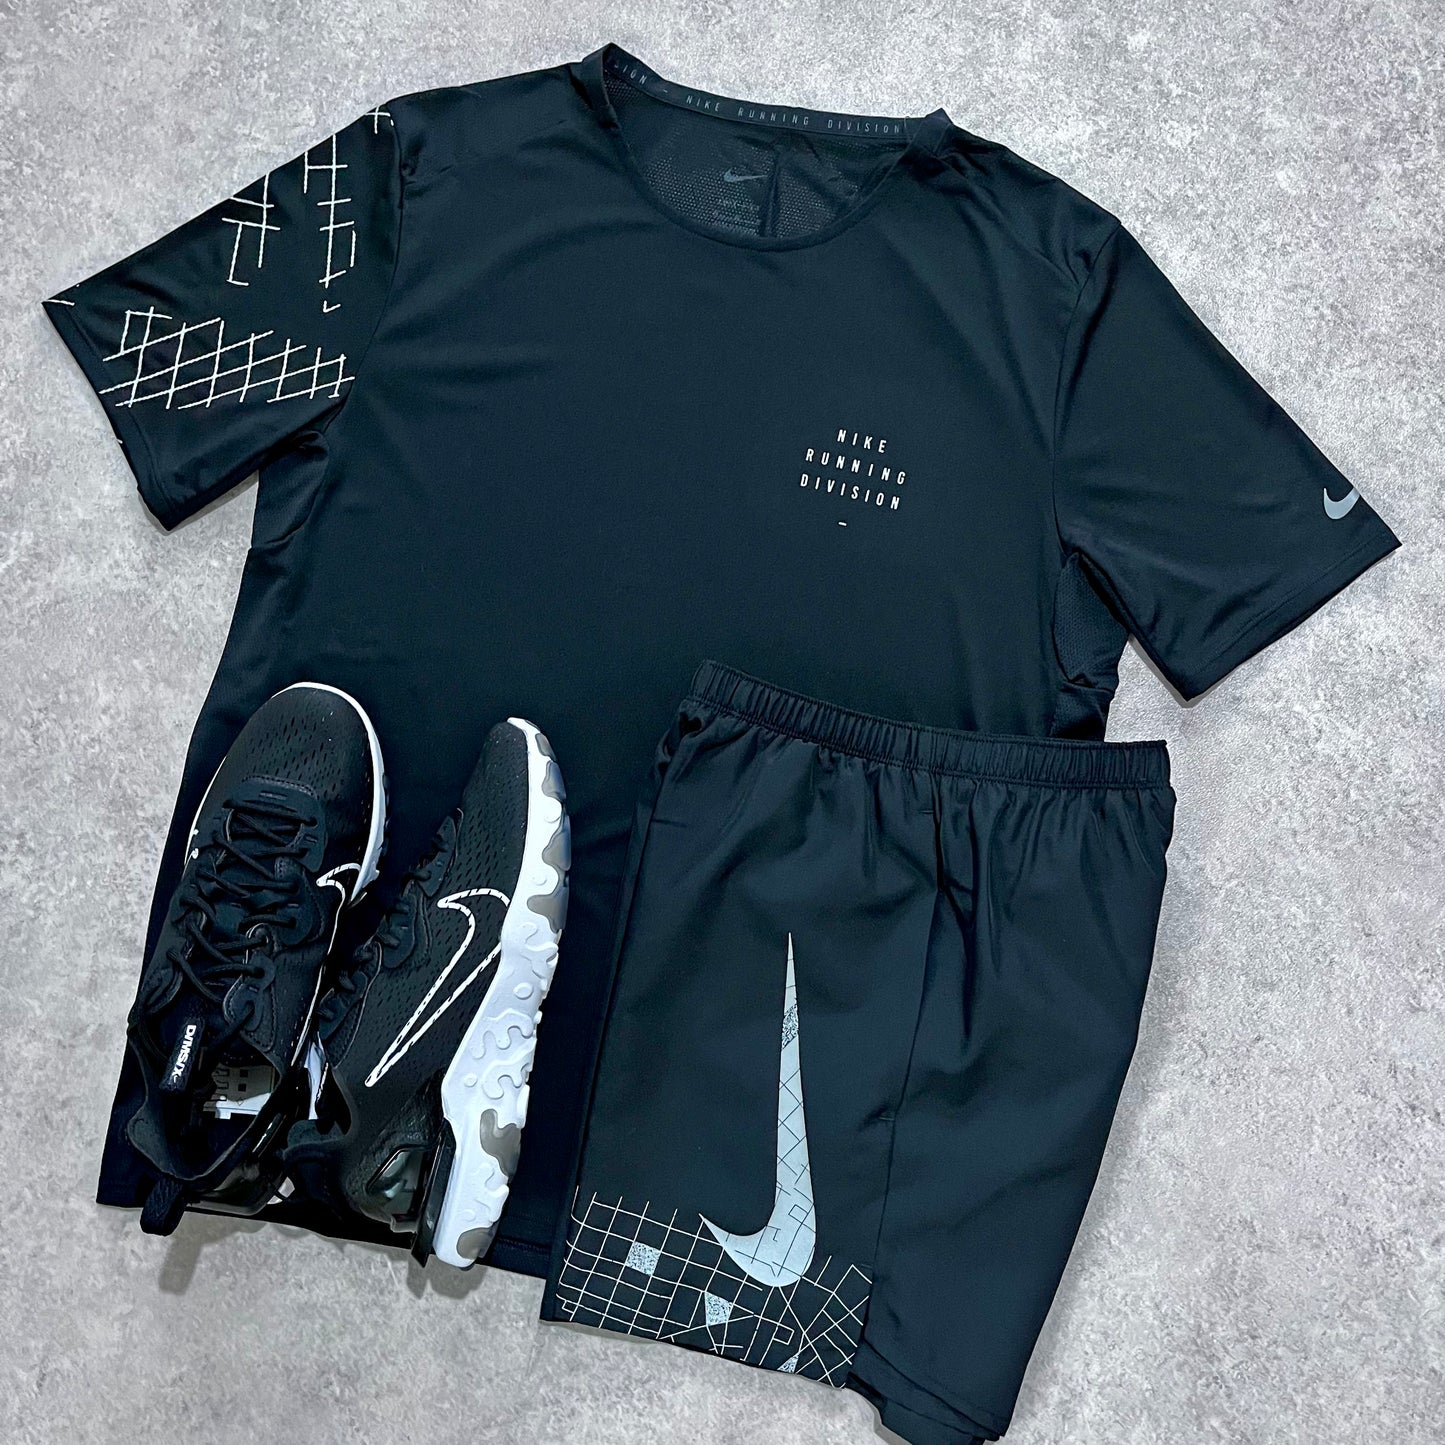 Nike Run Division Flash Set